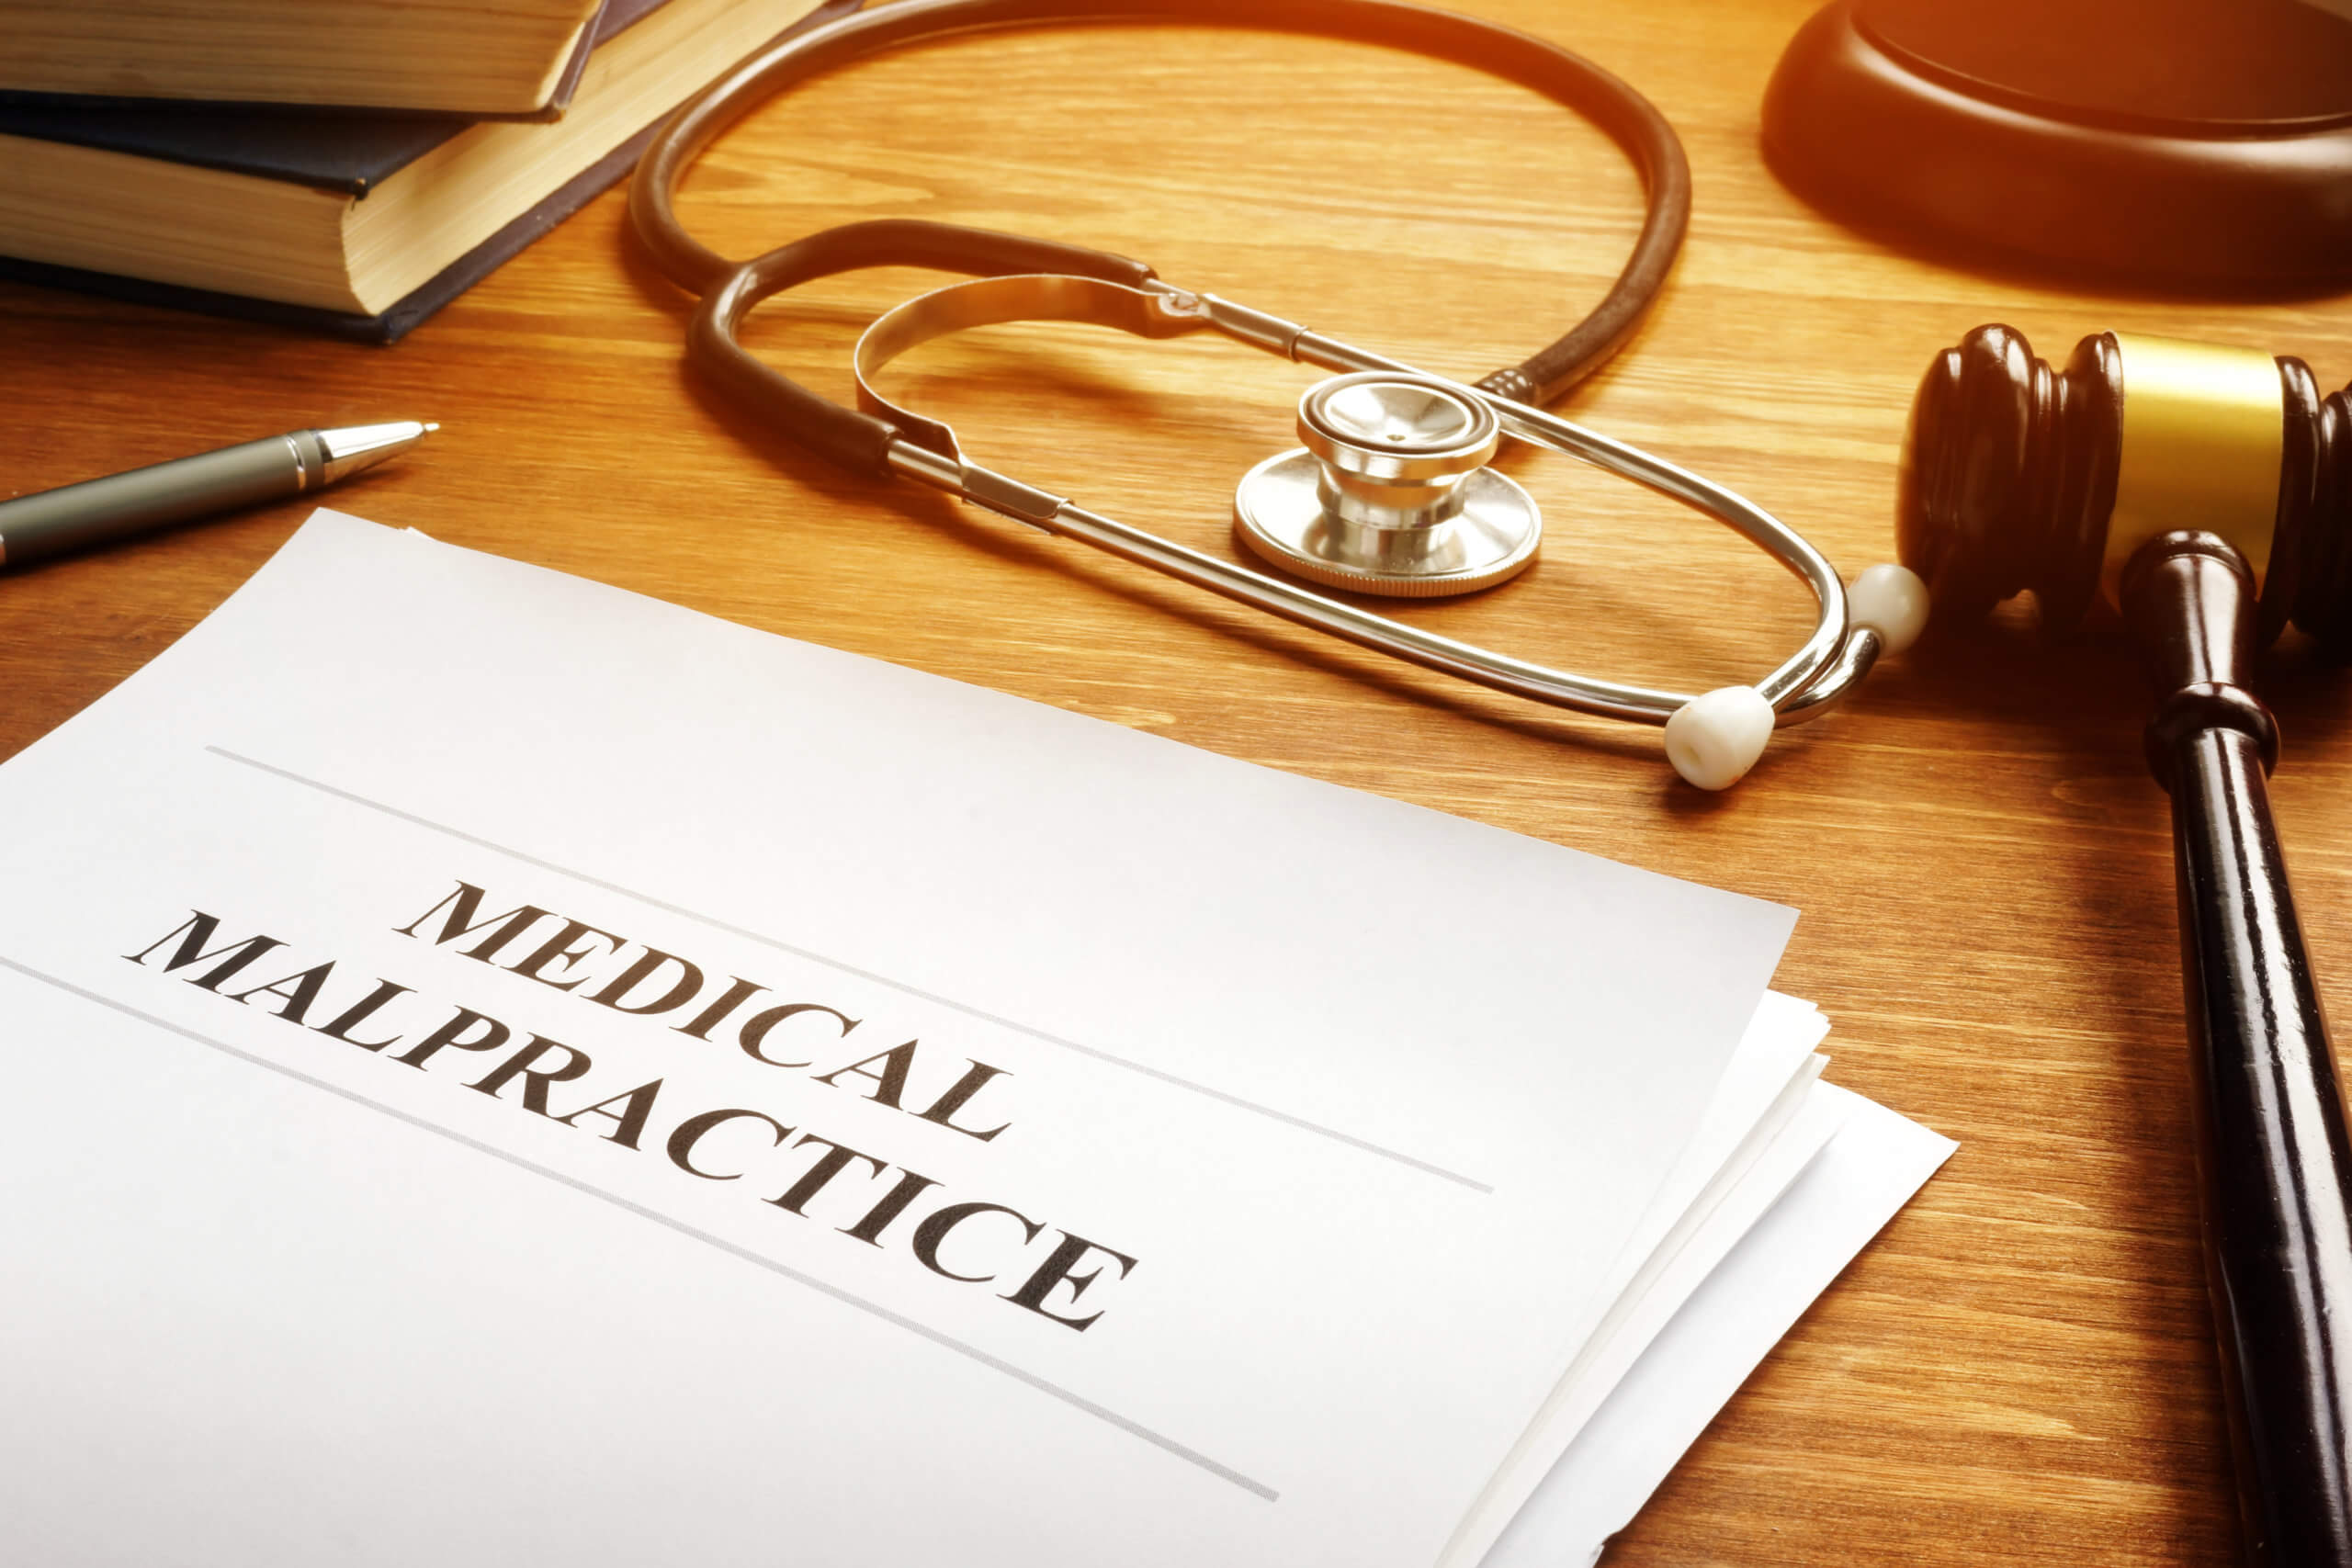 What Constitutes Medical Malpractice